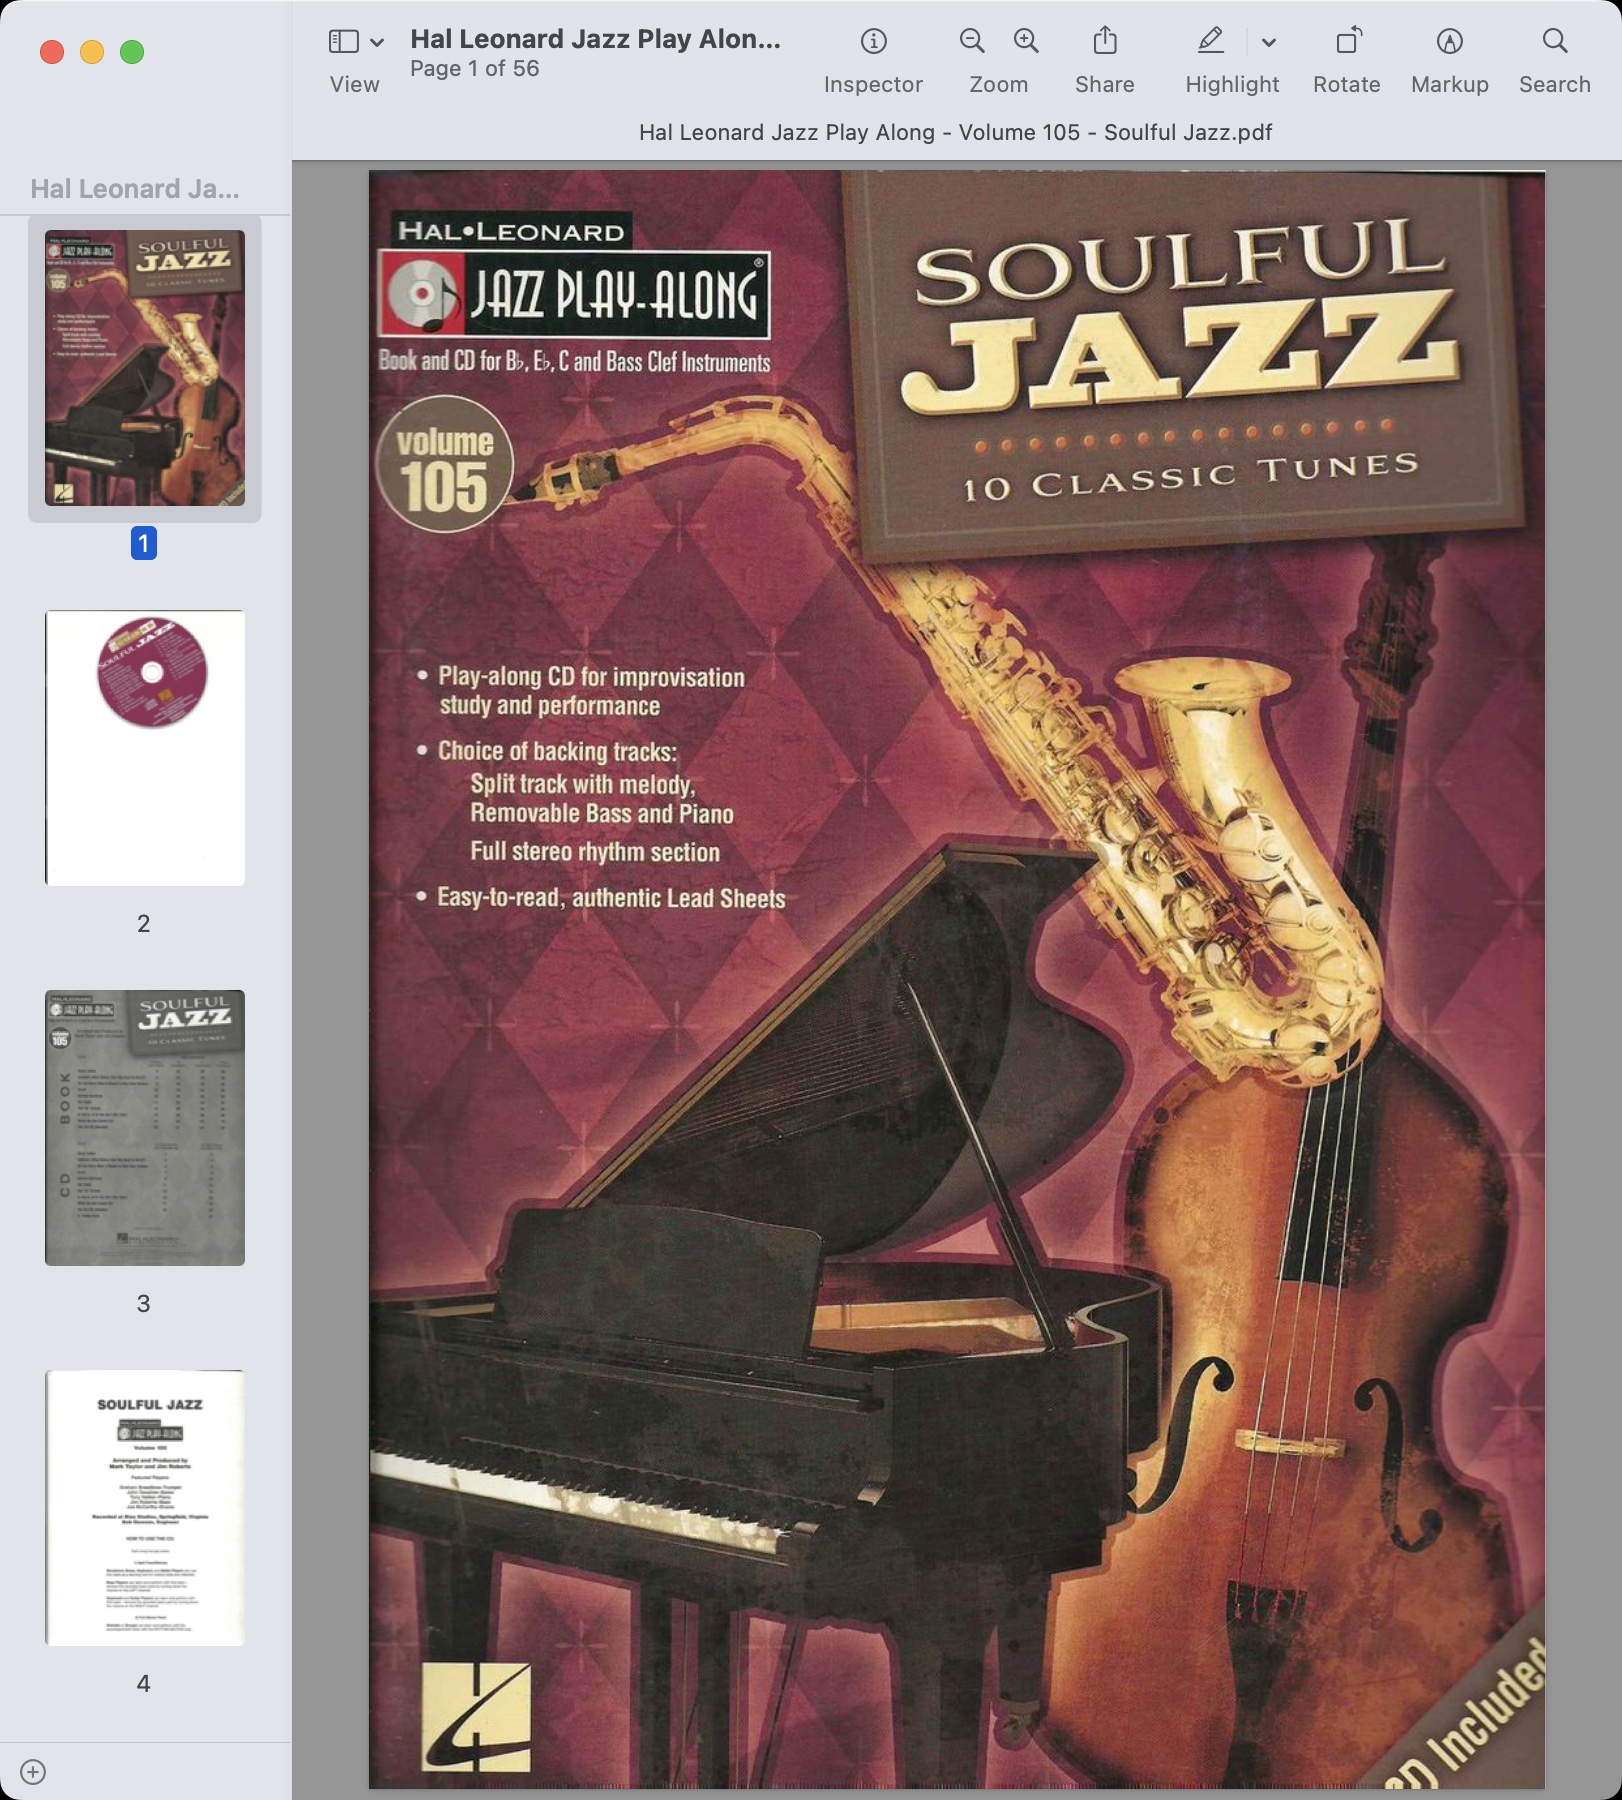 Hal Leonard Jazz Play Along - Volume 105 - Soulful Jazz.jpg